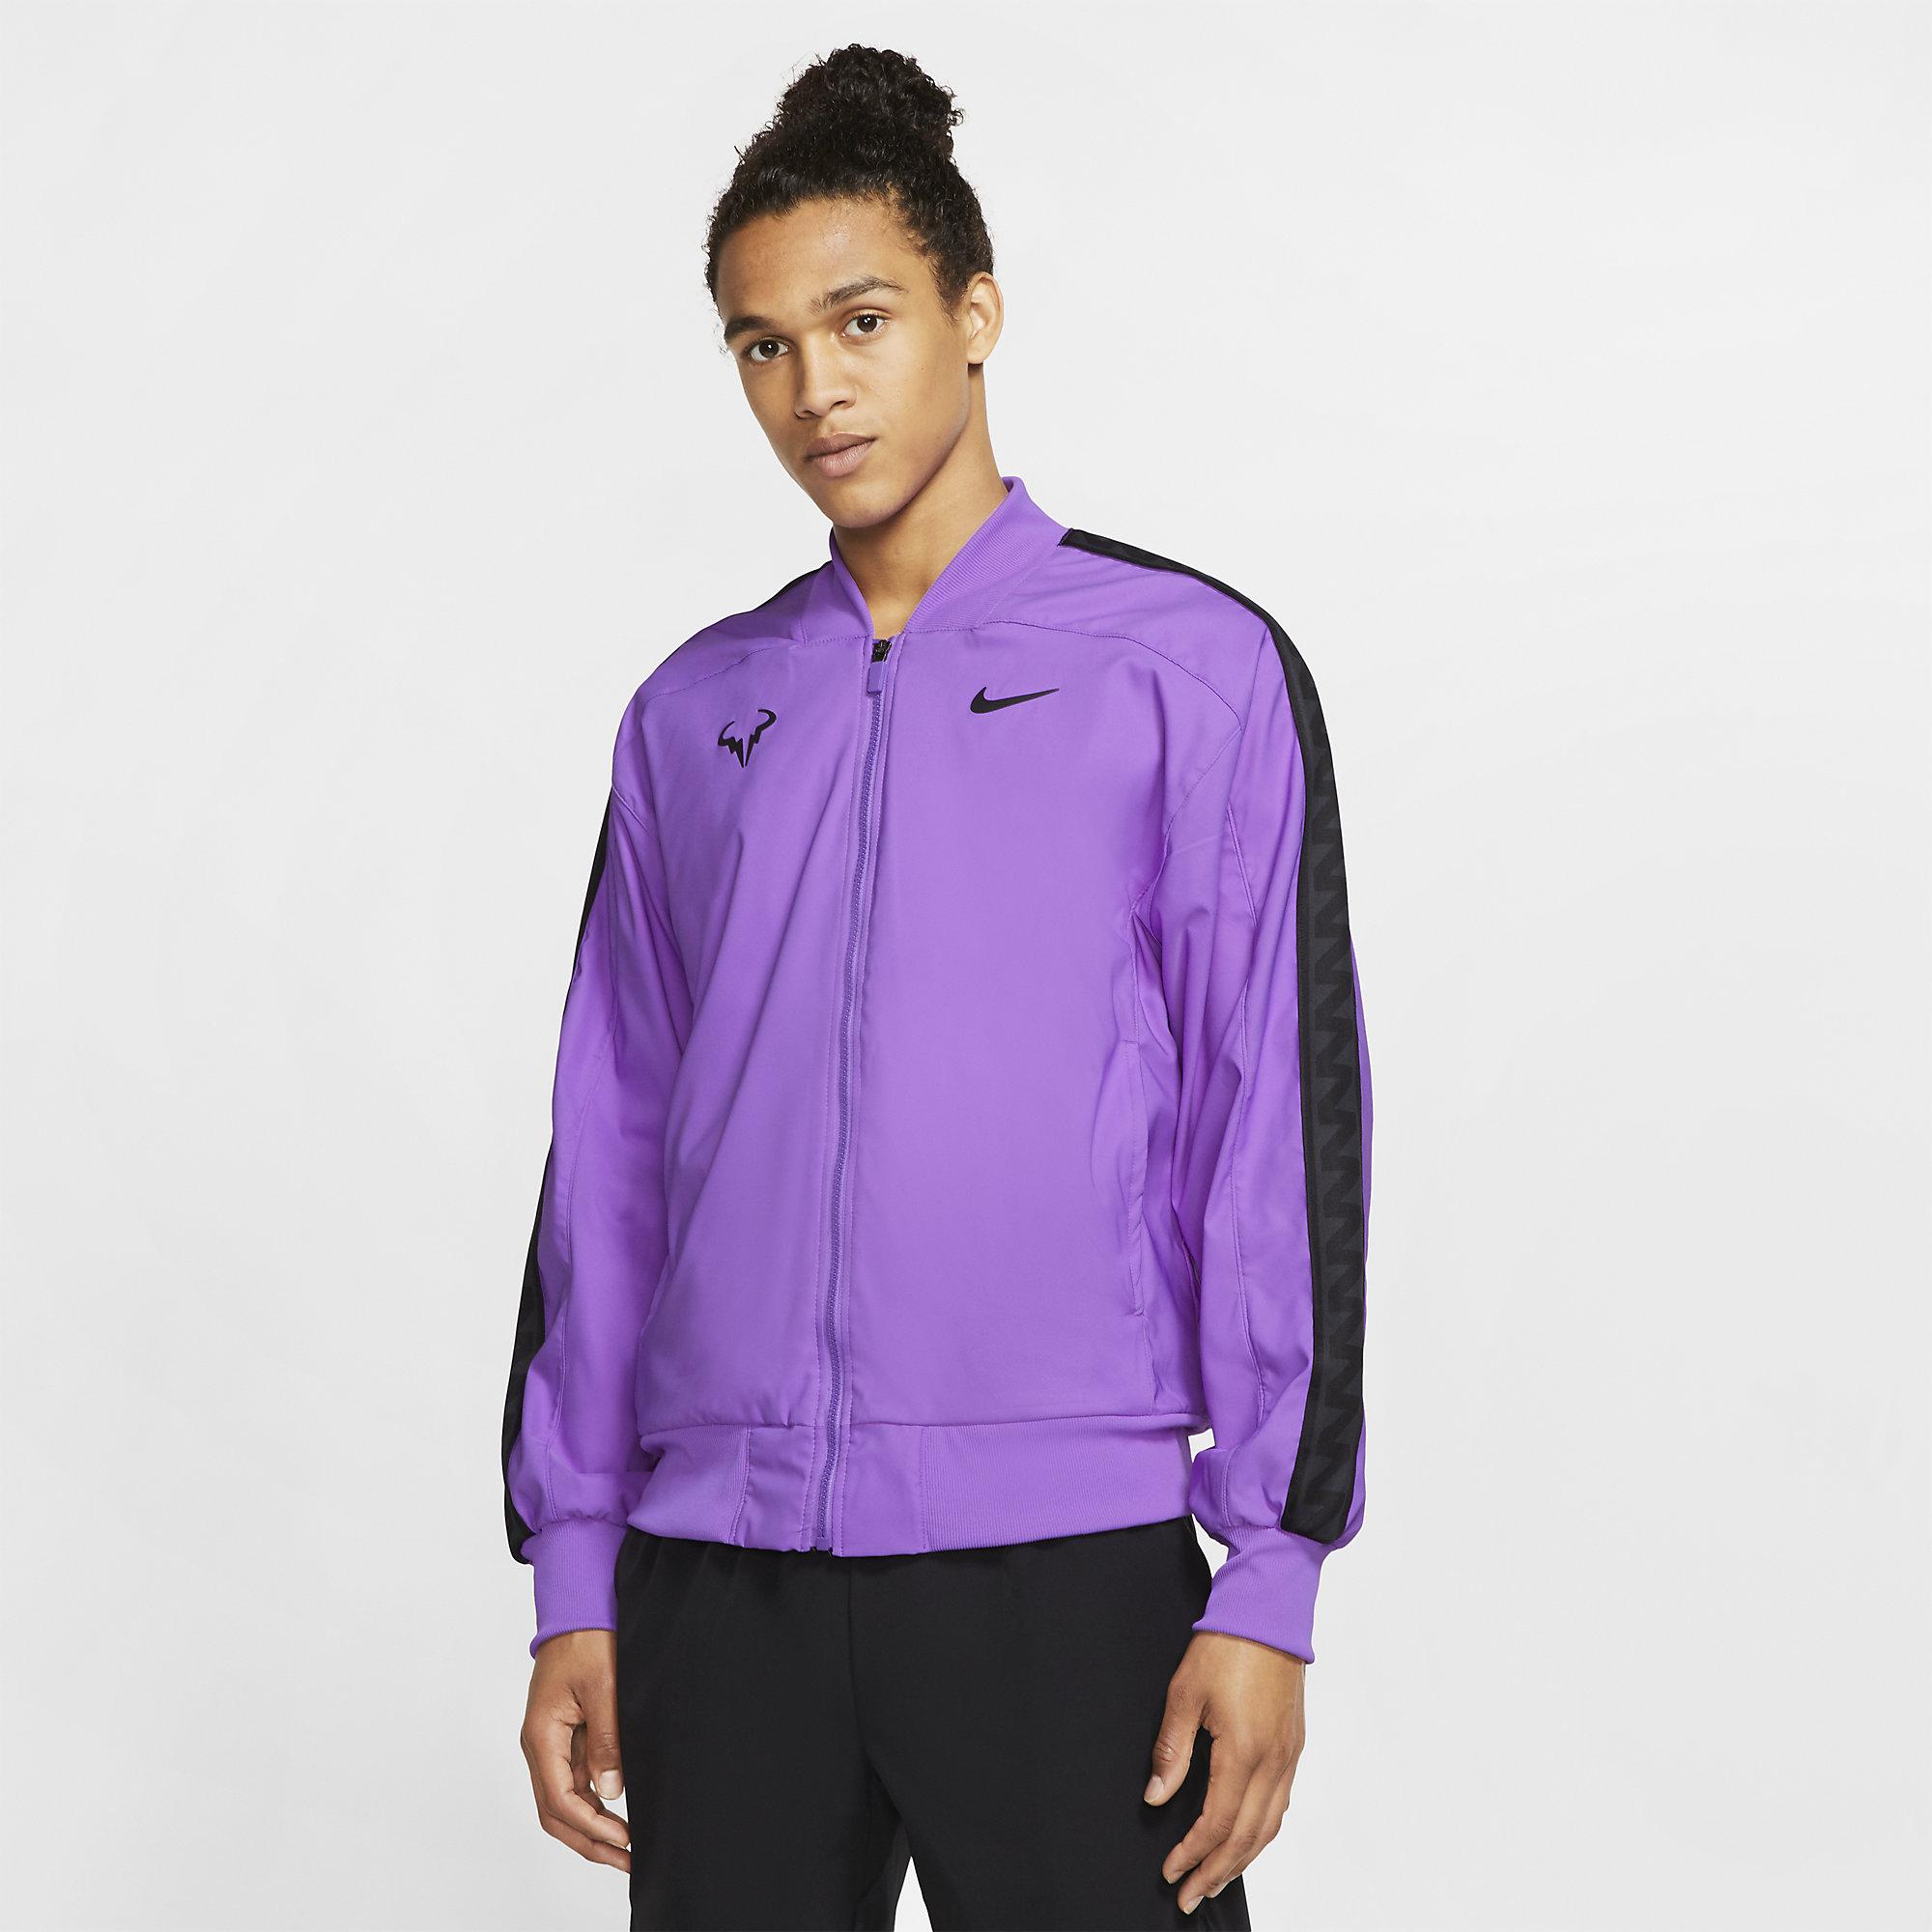 Nike Mens Rafa Tennis Jacket - Bright Violet - Tennisnuts.com